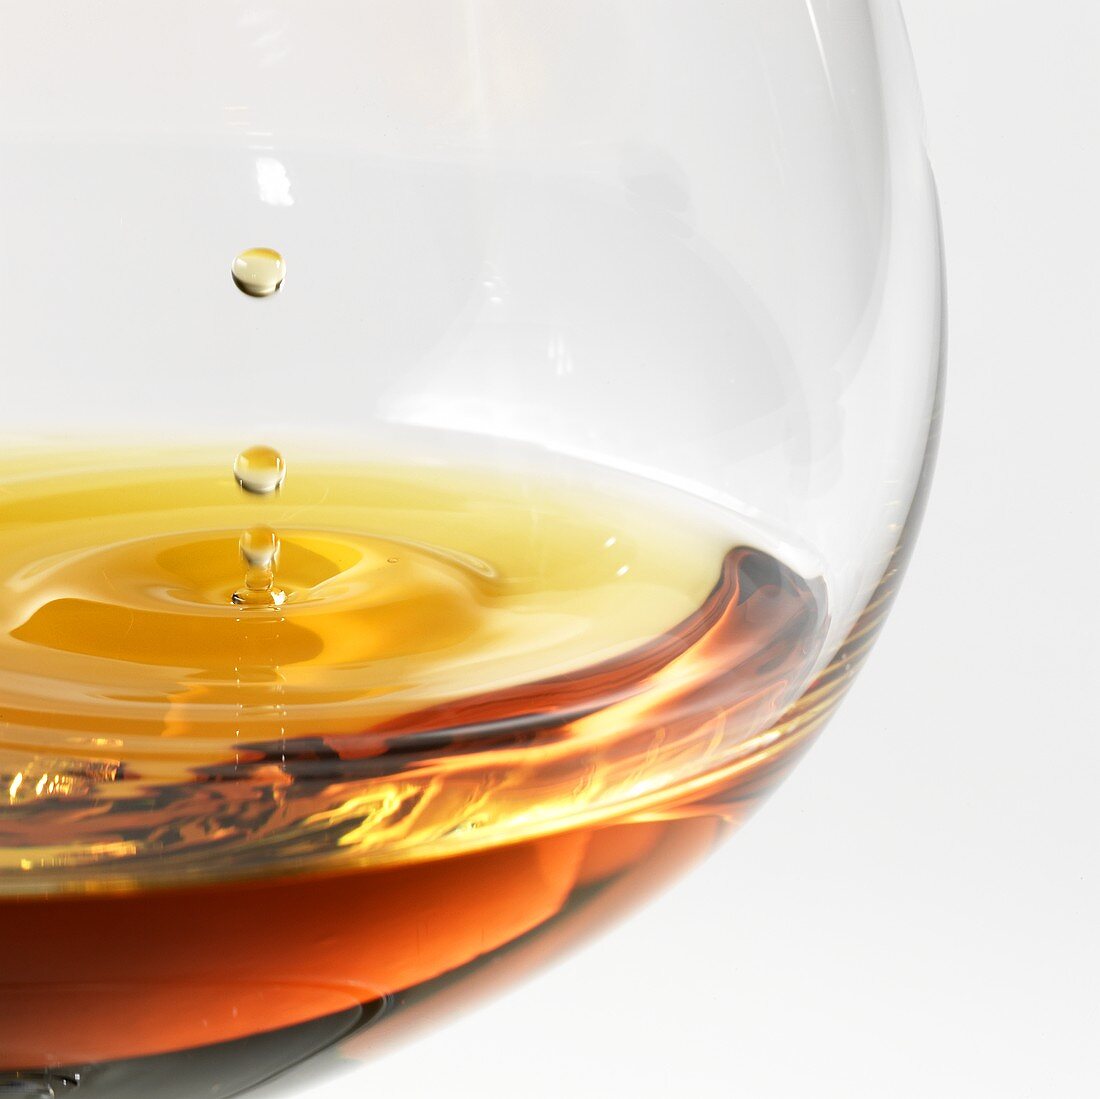 Cognac dripping into a brandy glass